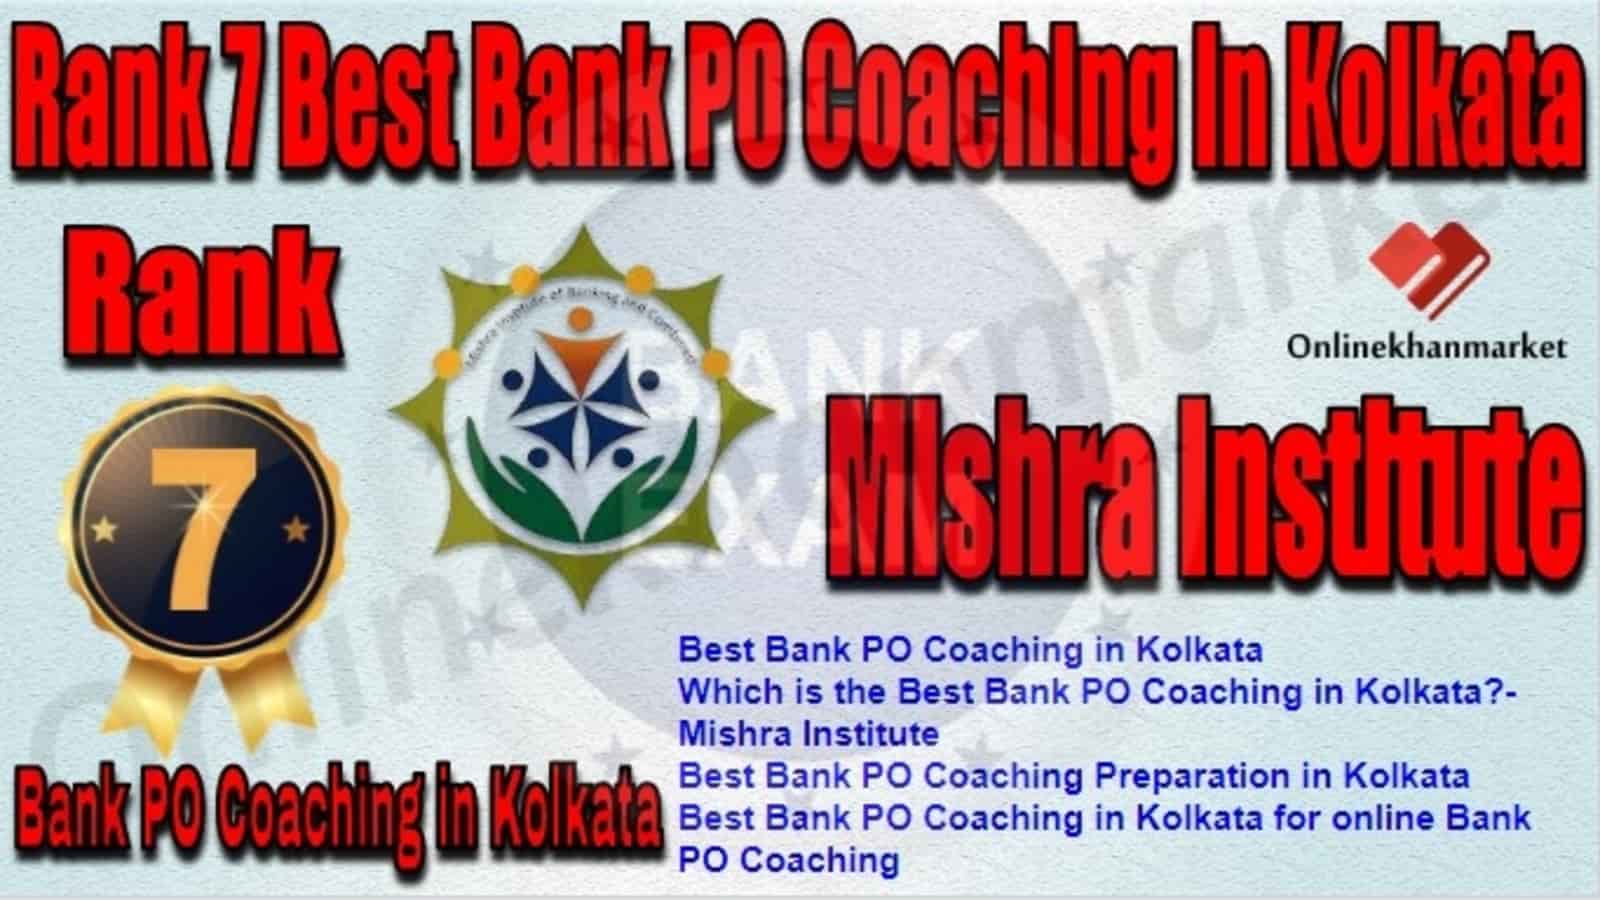 Rank 7 Best Bank PO Coaching in Kolkata